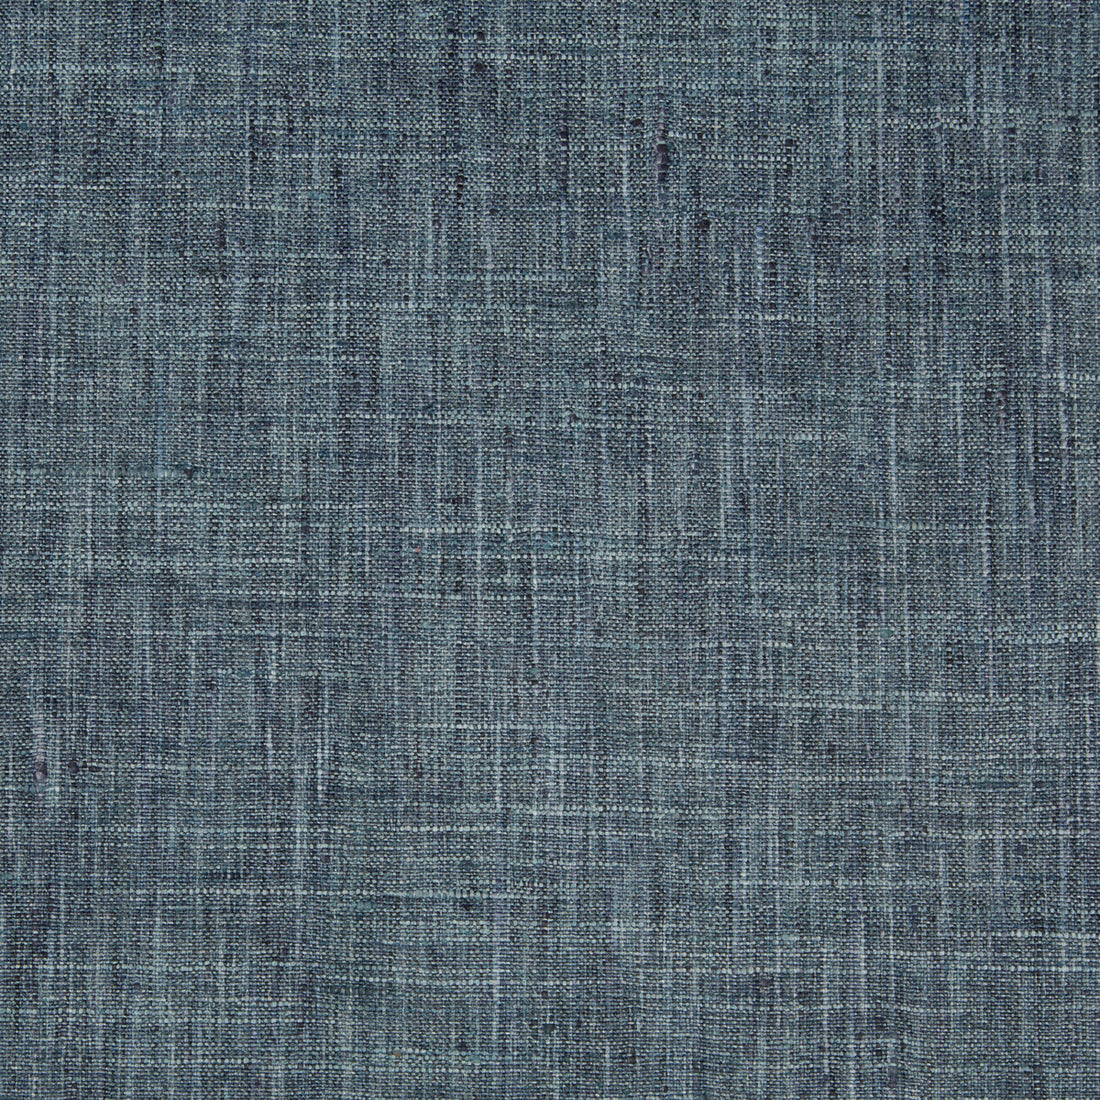 Kravet Smart fabric in 34983-5 color - pattern 34983.5.0 - by Kravet Smart